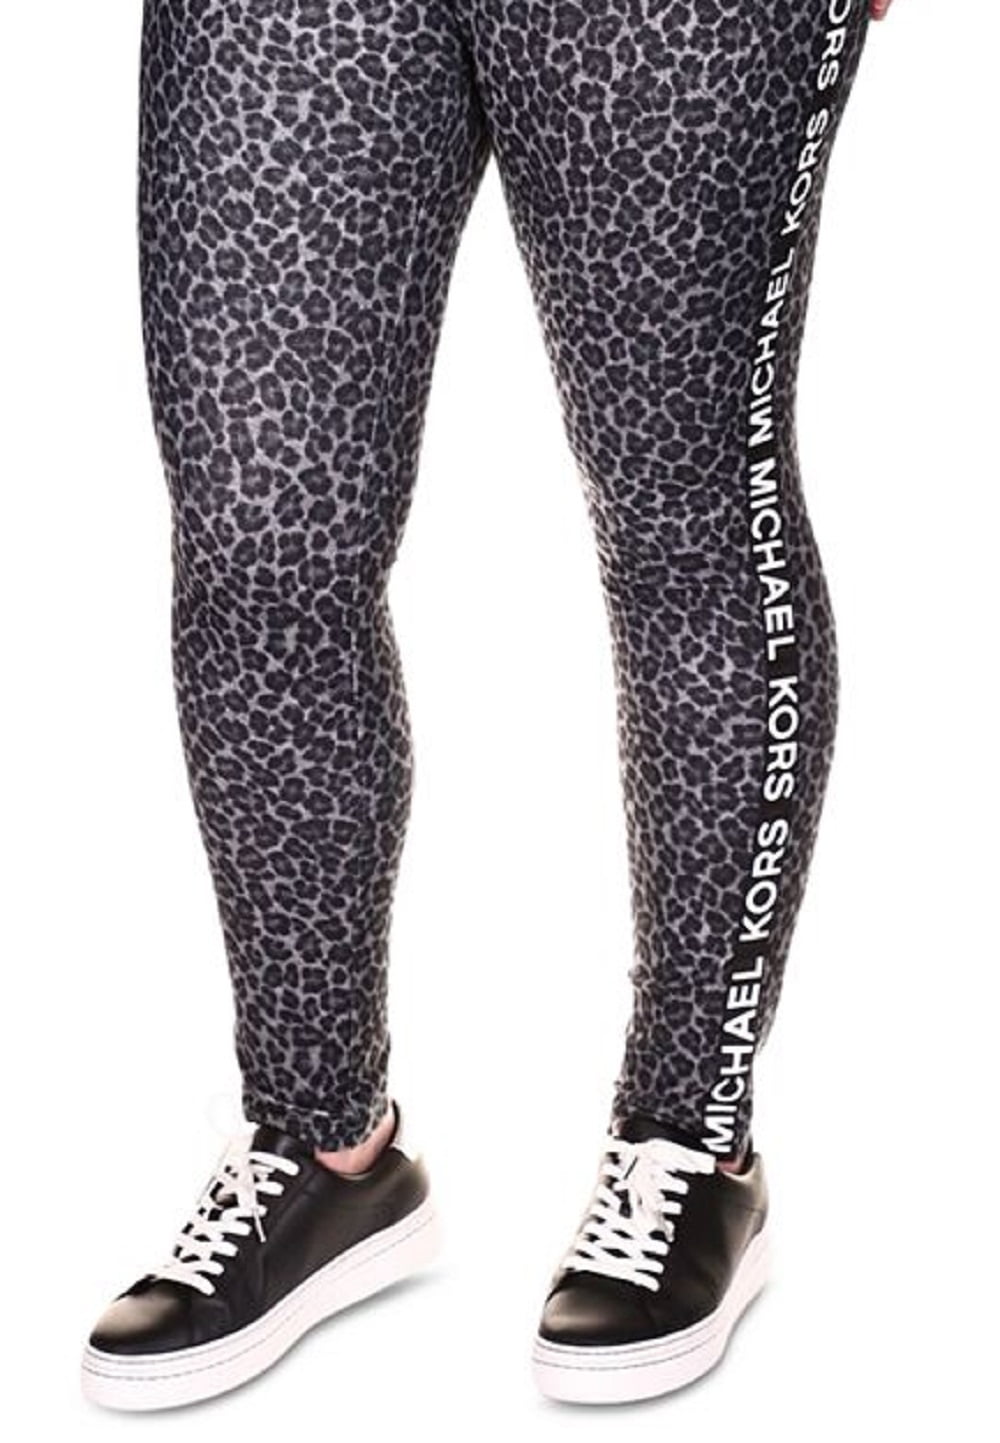 Michael Kors Women's Plus Cheetah Print Leggings Gray Size 3X